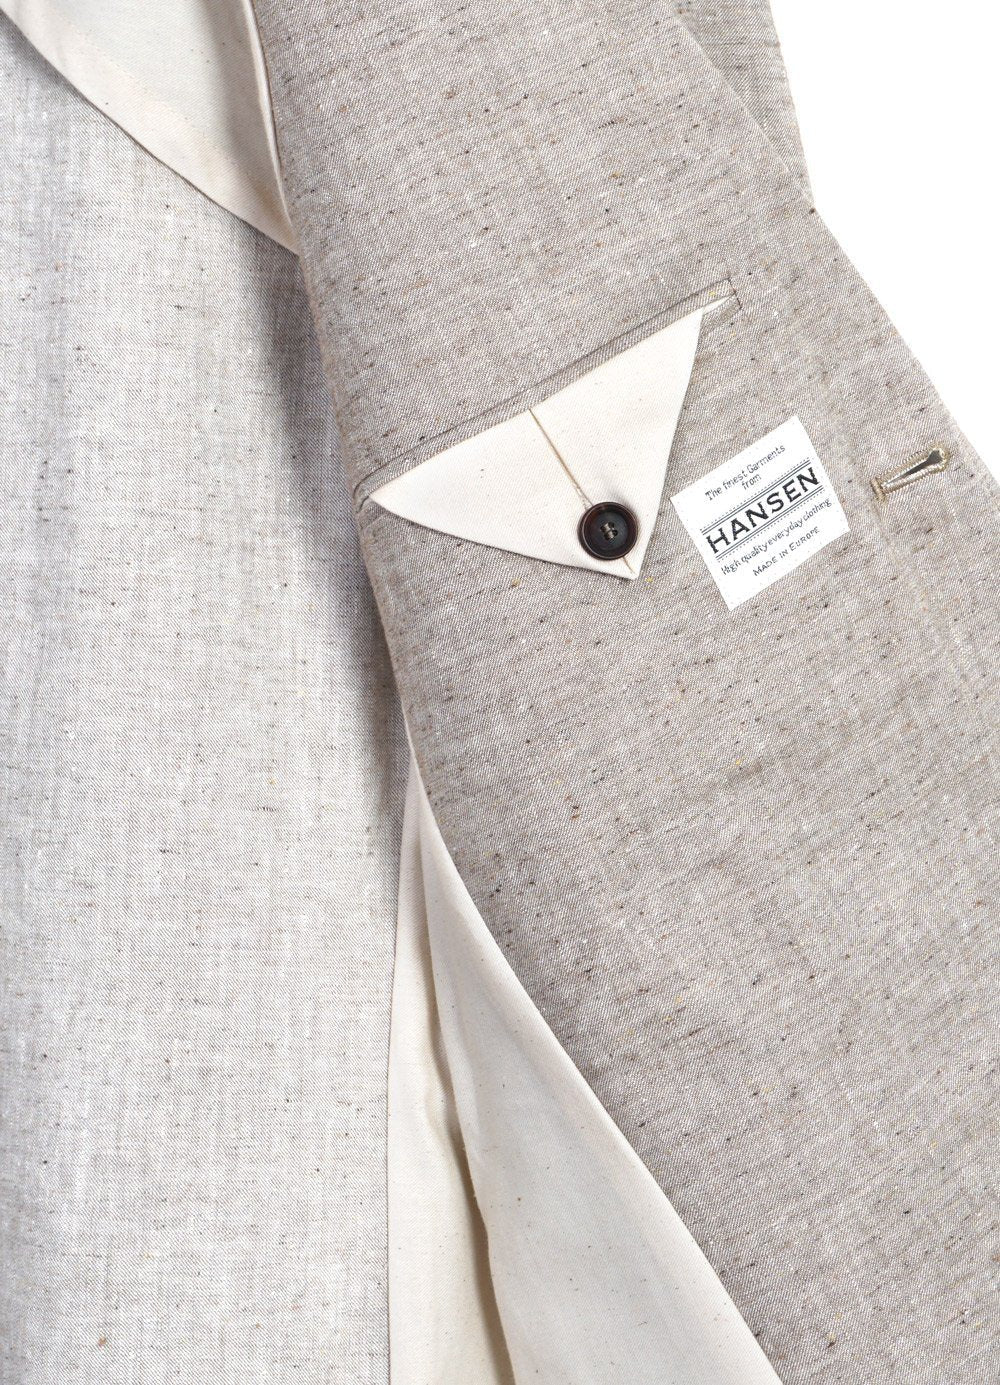 HANSEN GARMENTS - CHRIS | Two Button Classic Blazer | Beach - HANSEN Garments